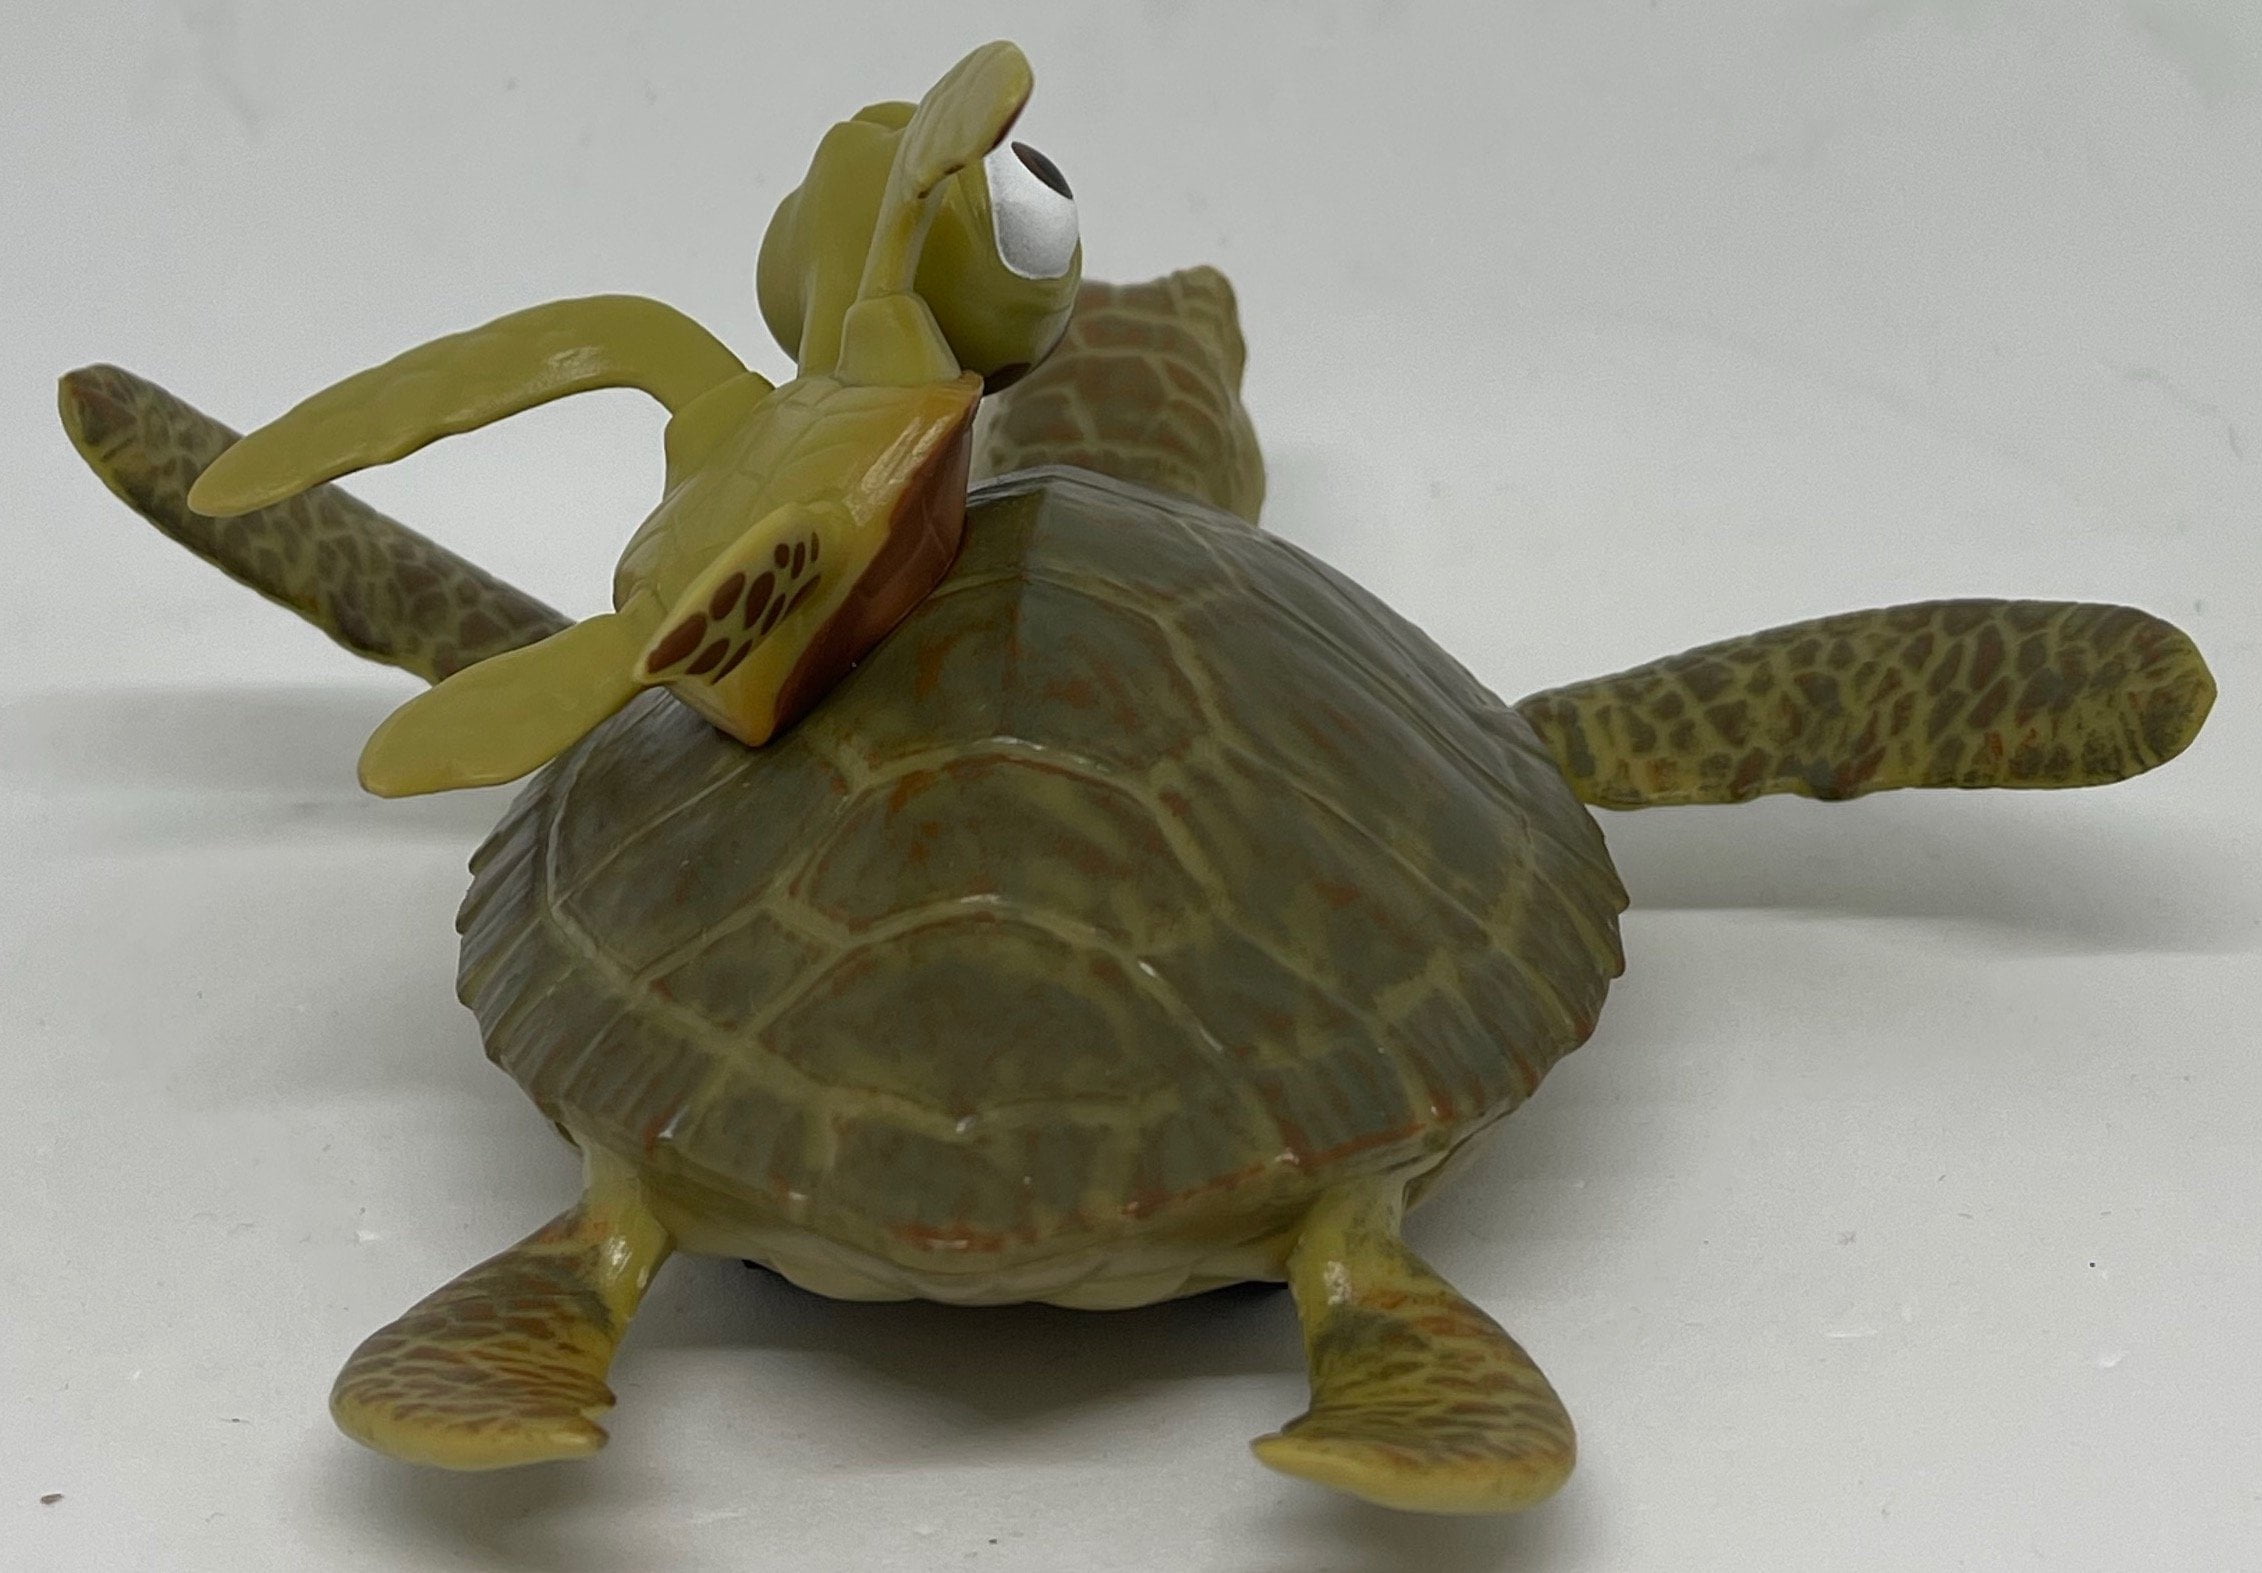 2003 Disney Pixar Finding Nemo McDonalds Happy Meal Toy Squirt the Sea Turtle 